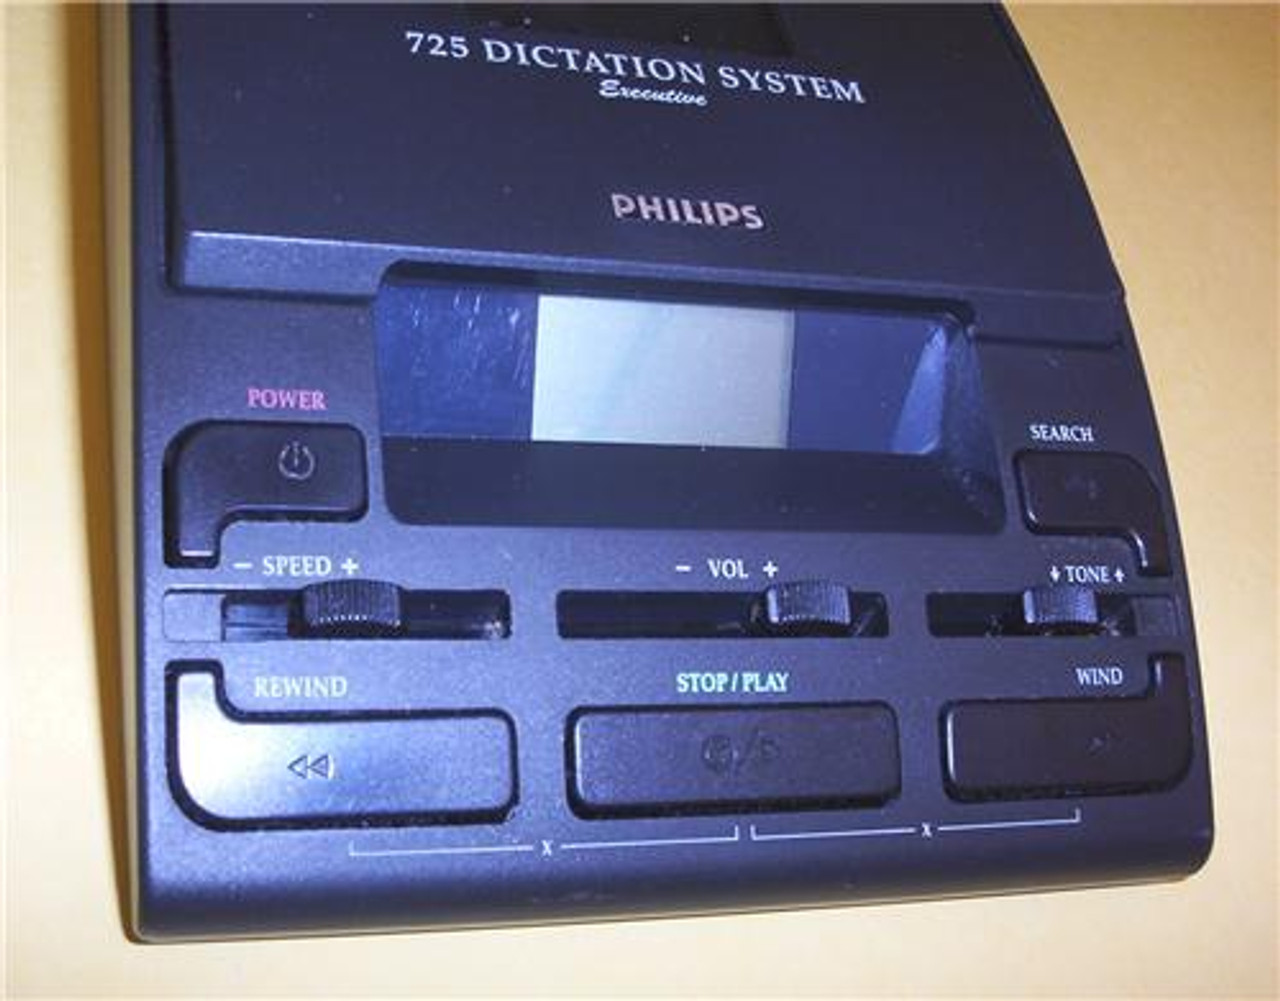 Philips Lfh 725 Minicassette Mini cassette Dictation Machine controls